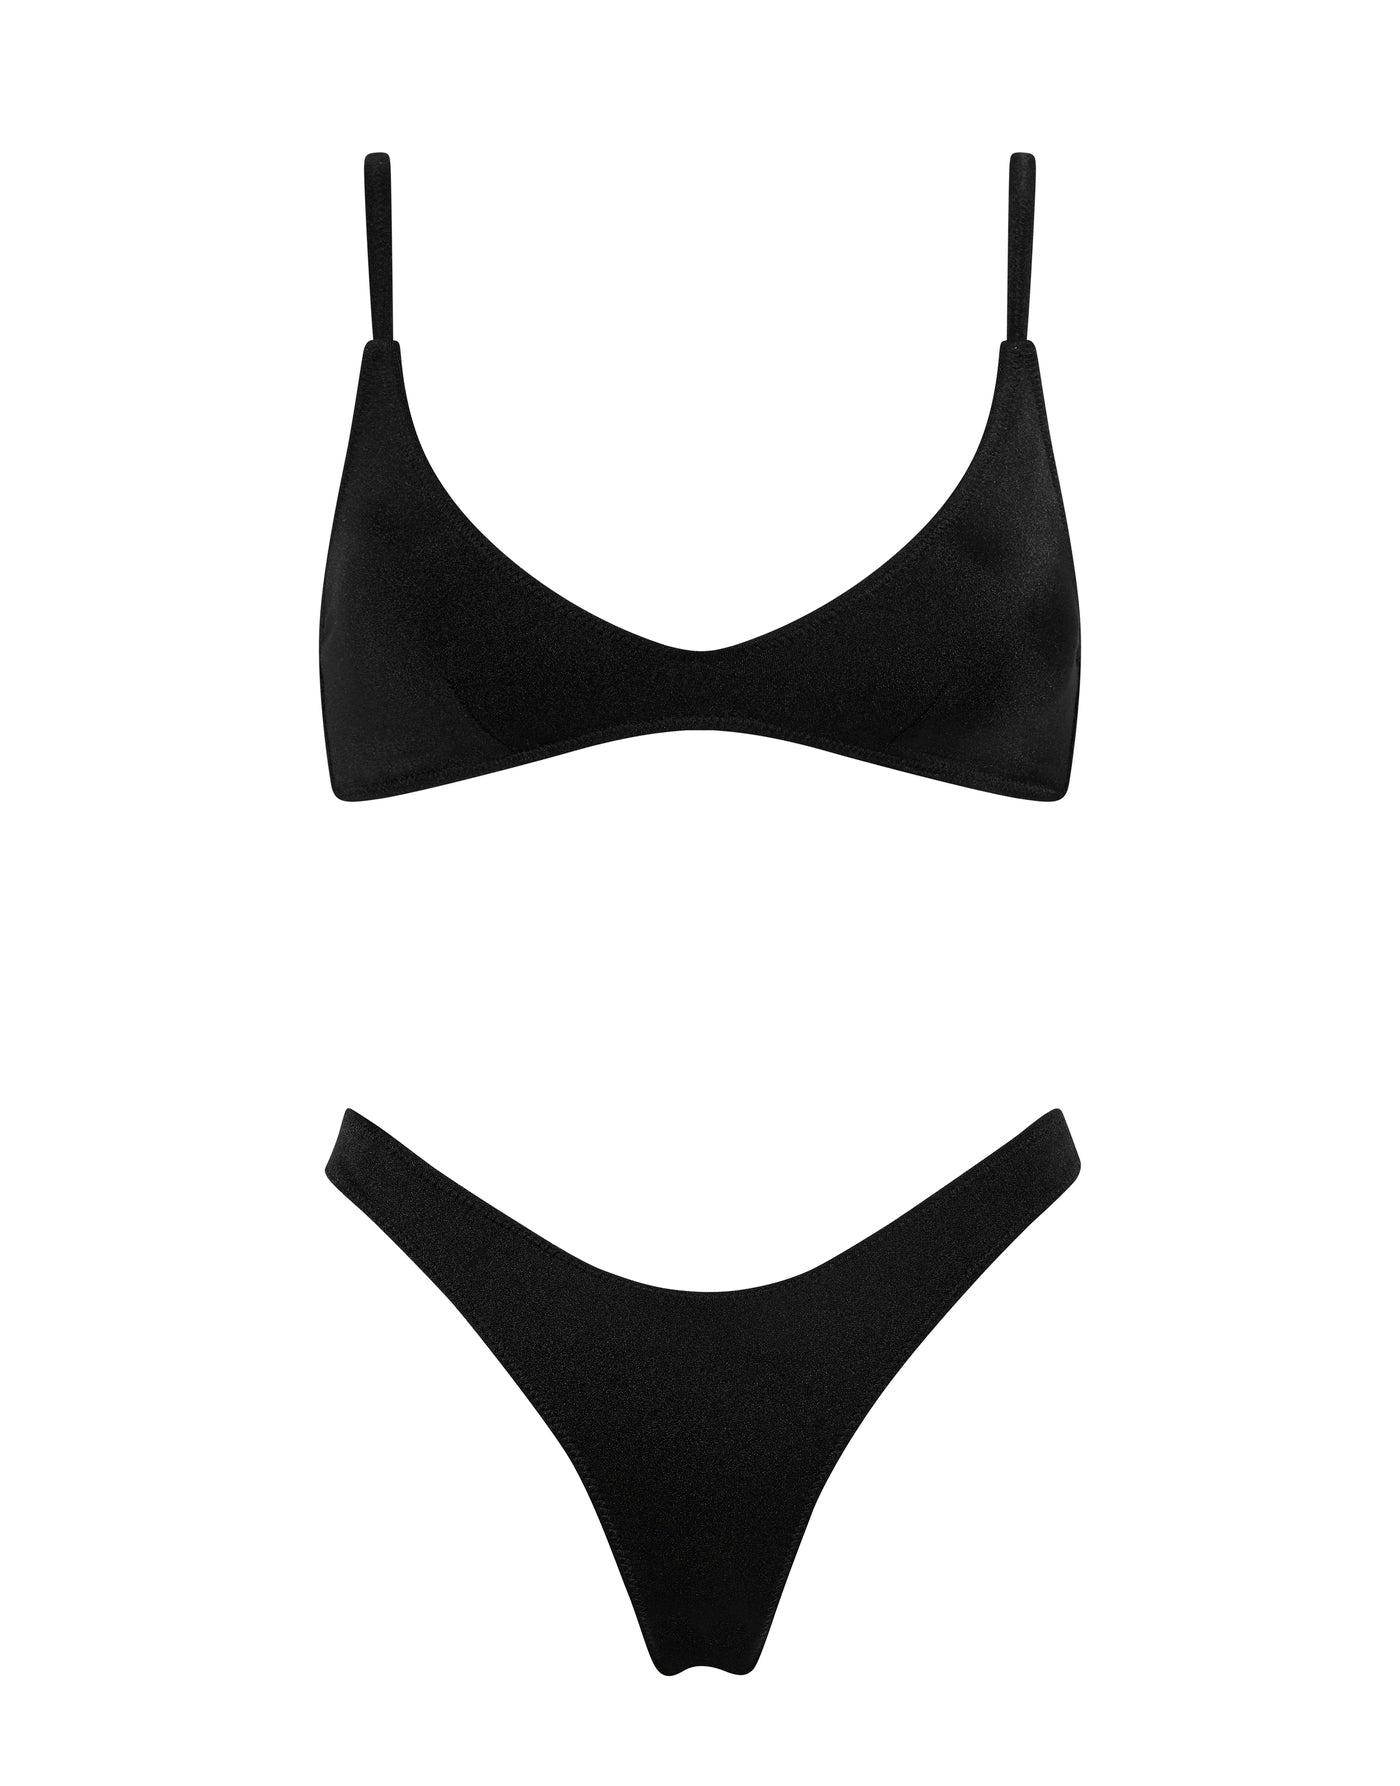 Triangl Mint Black Neoprene Bikini Swim Suit 2-Piece Tied Bathing Suit